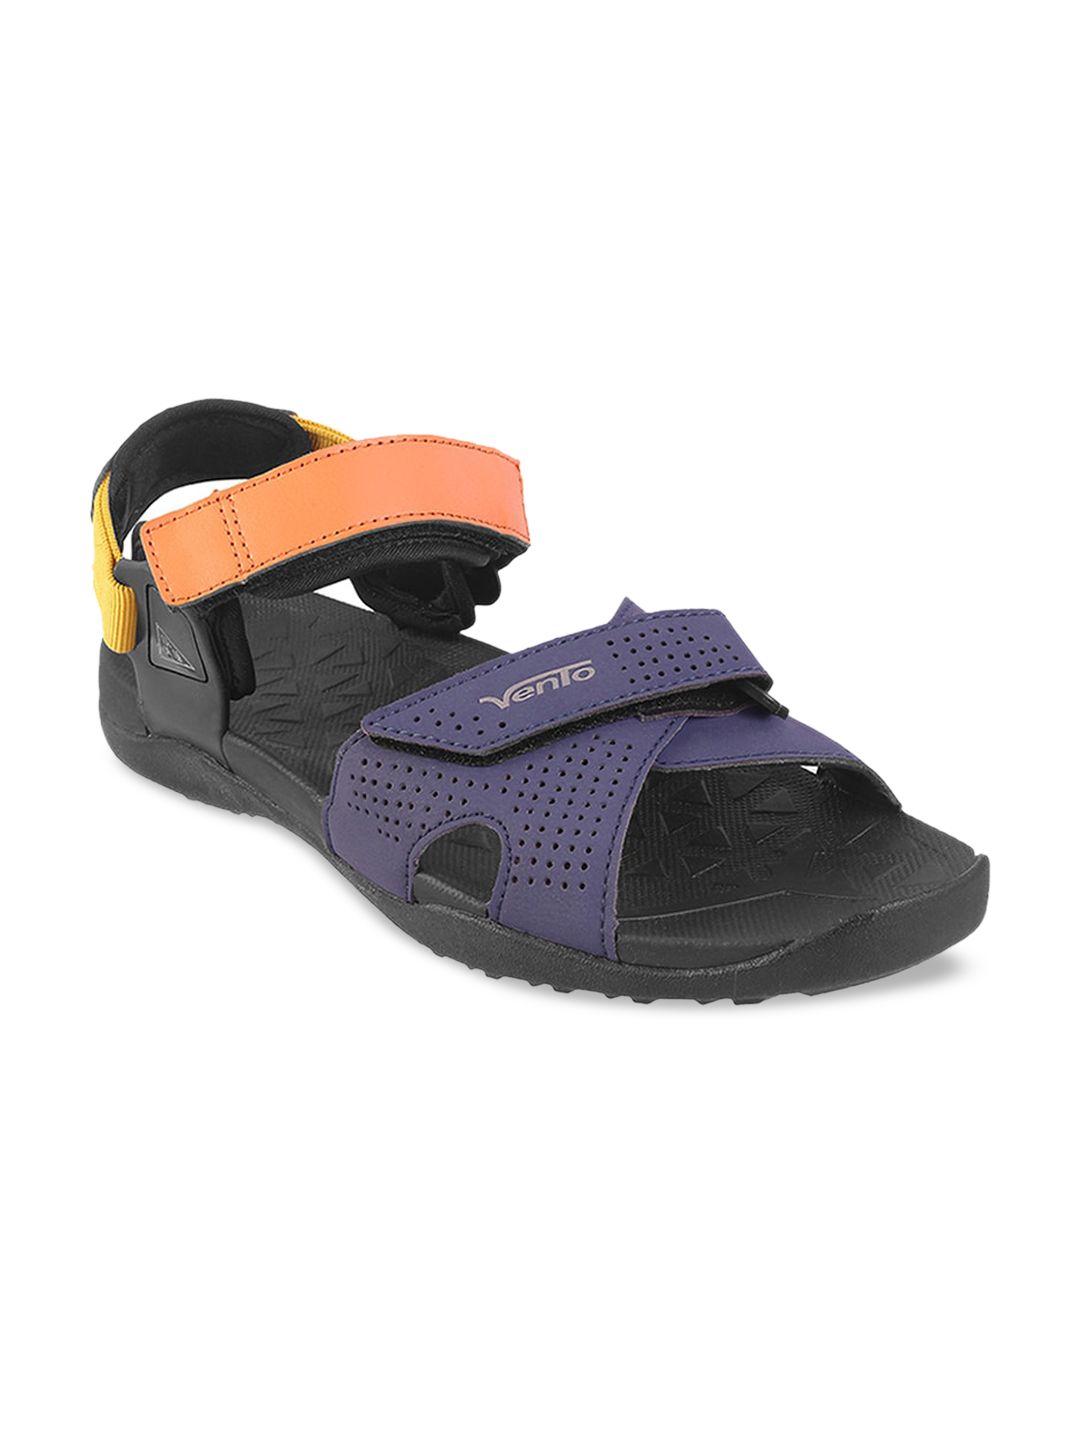 Vento Unisex Navy Blue & Orange Sports Sandals Price in India